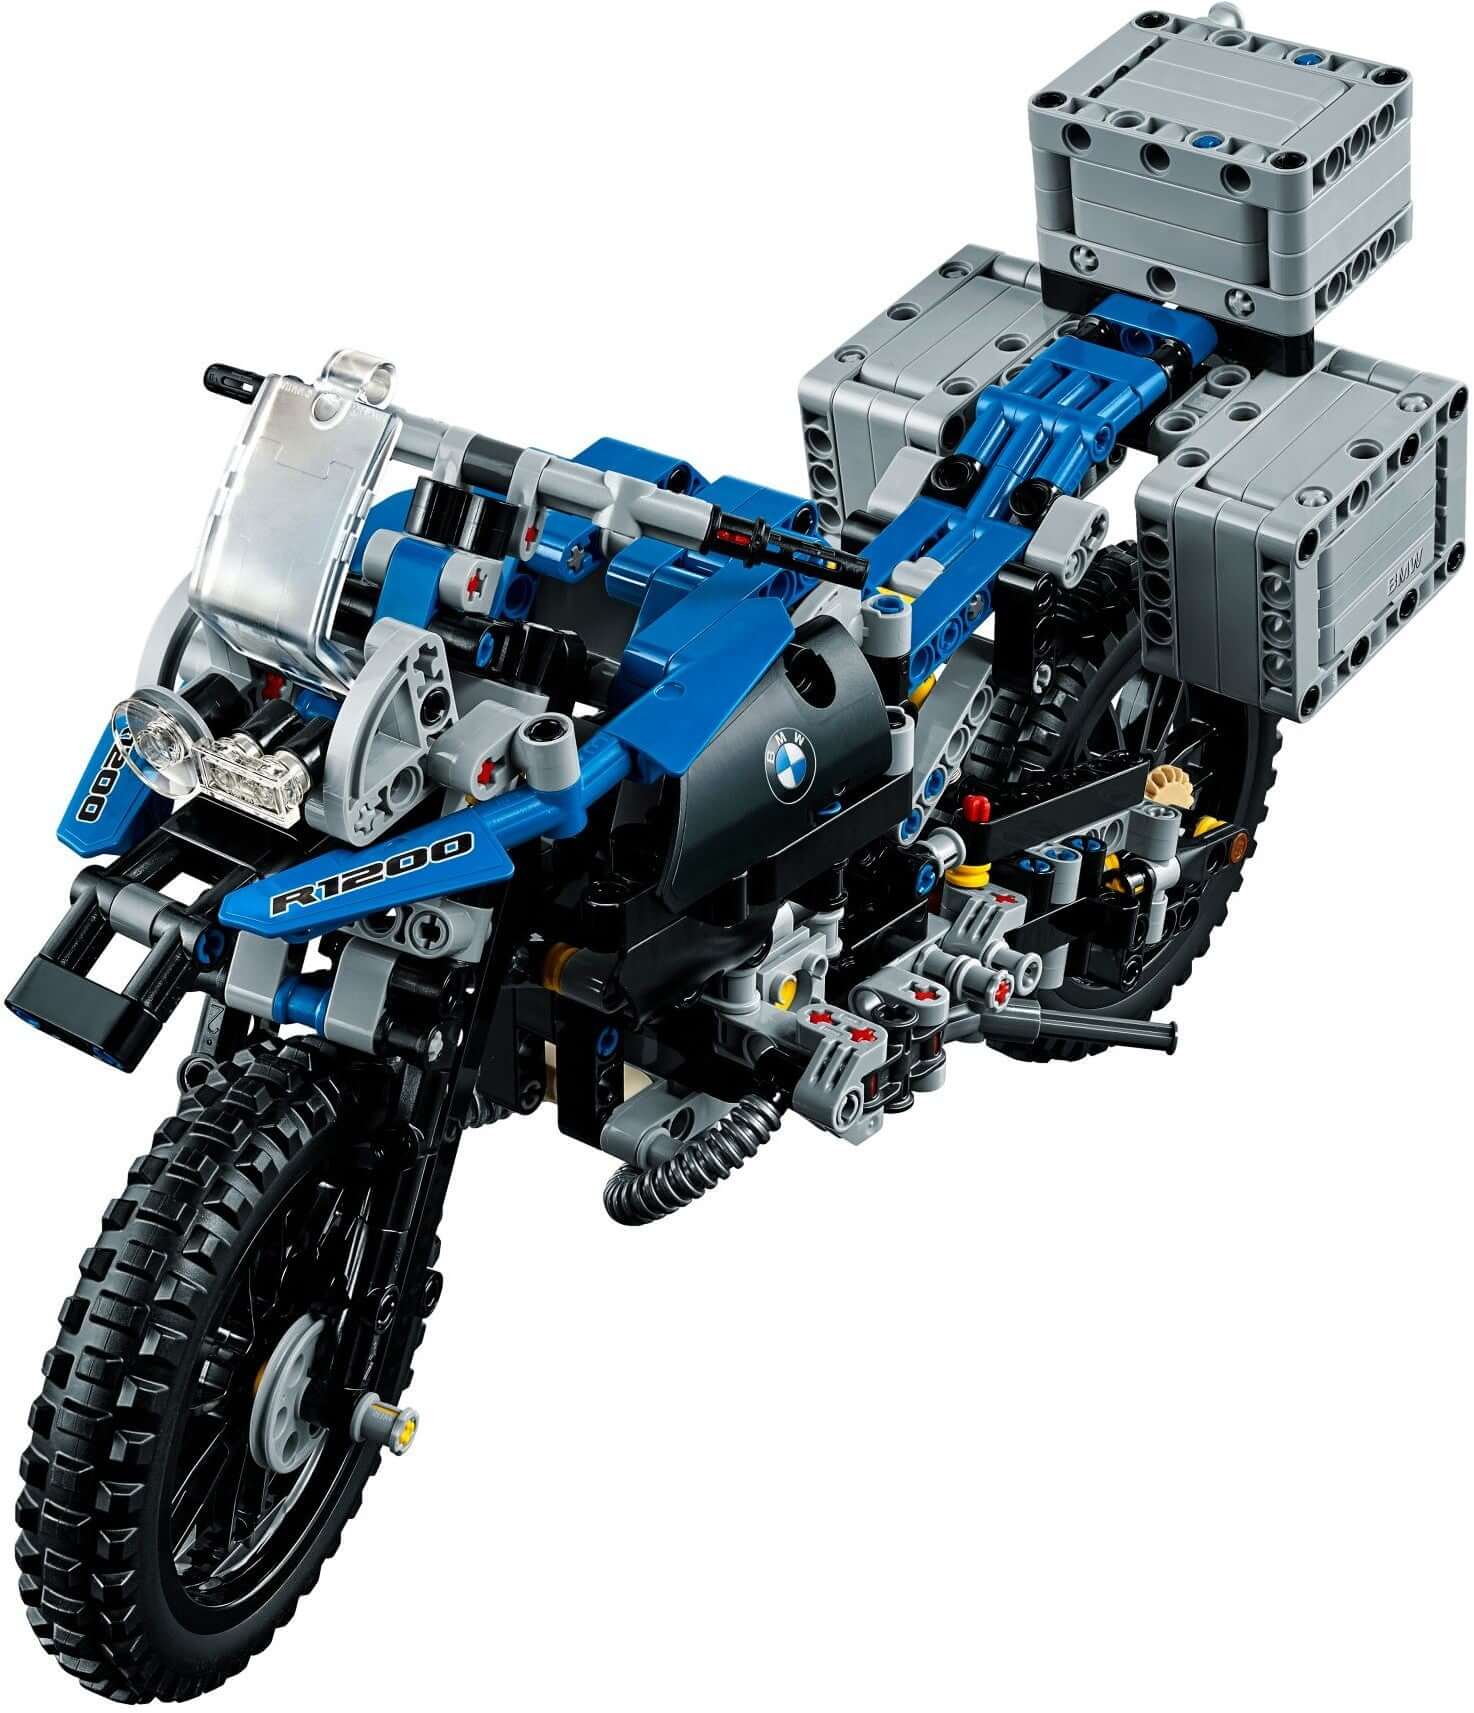 LEGO TECHNIC: BMW R 1200 GS Adventure (42063) for sale online